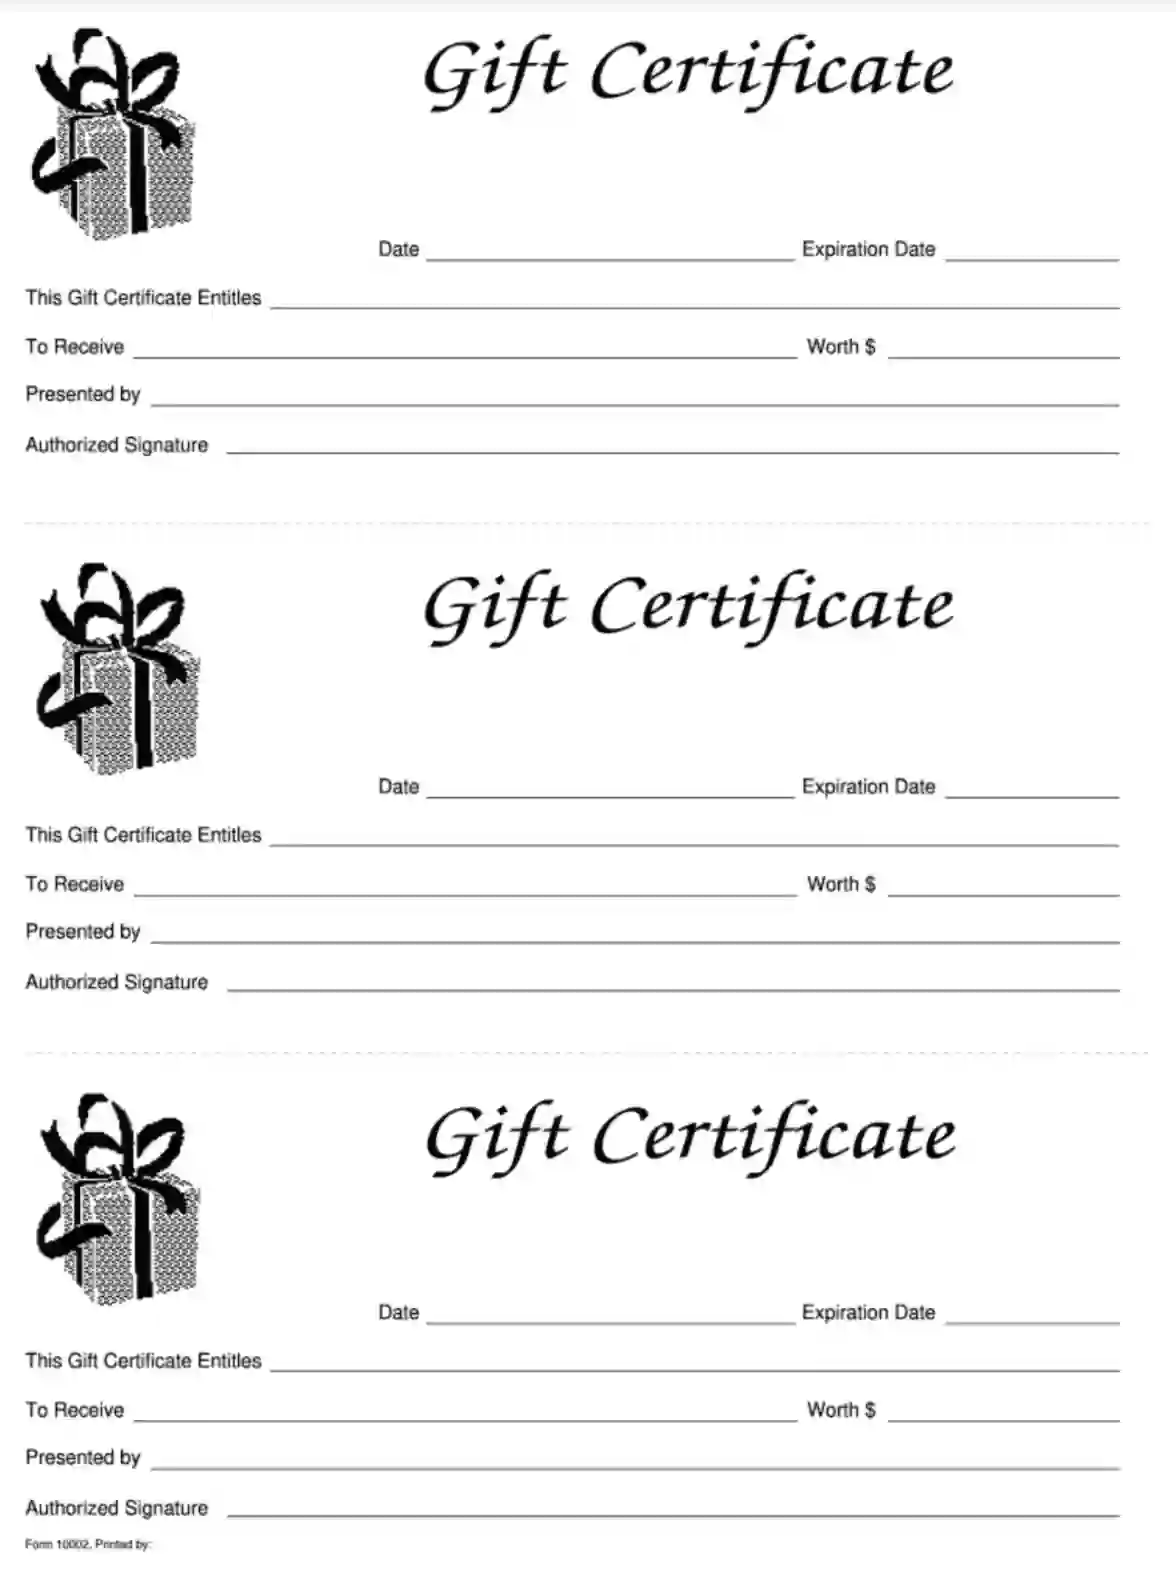 Gift Voucher Template Gift Certificate Printable Editable Gift Voucher 